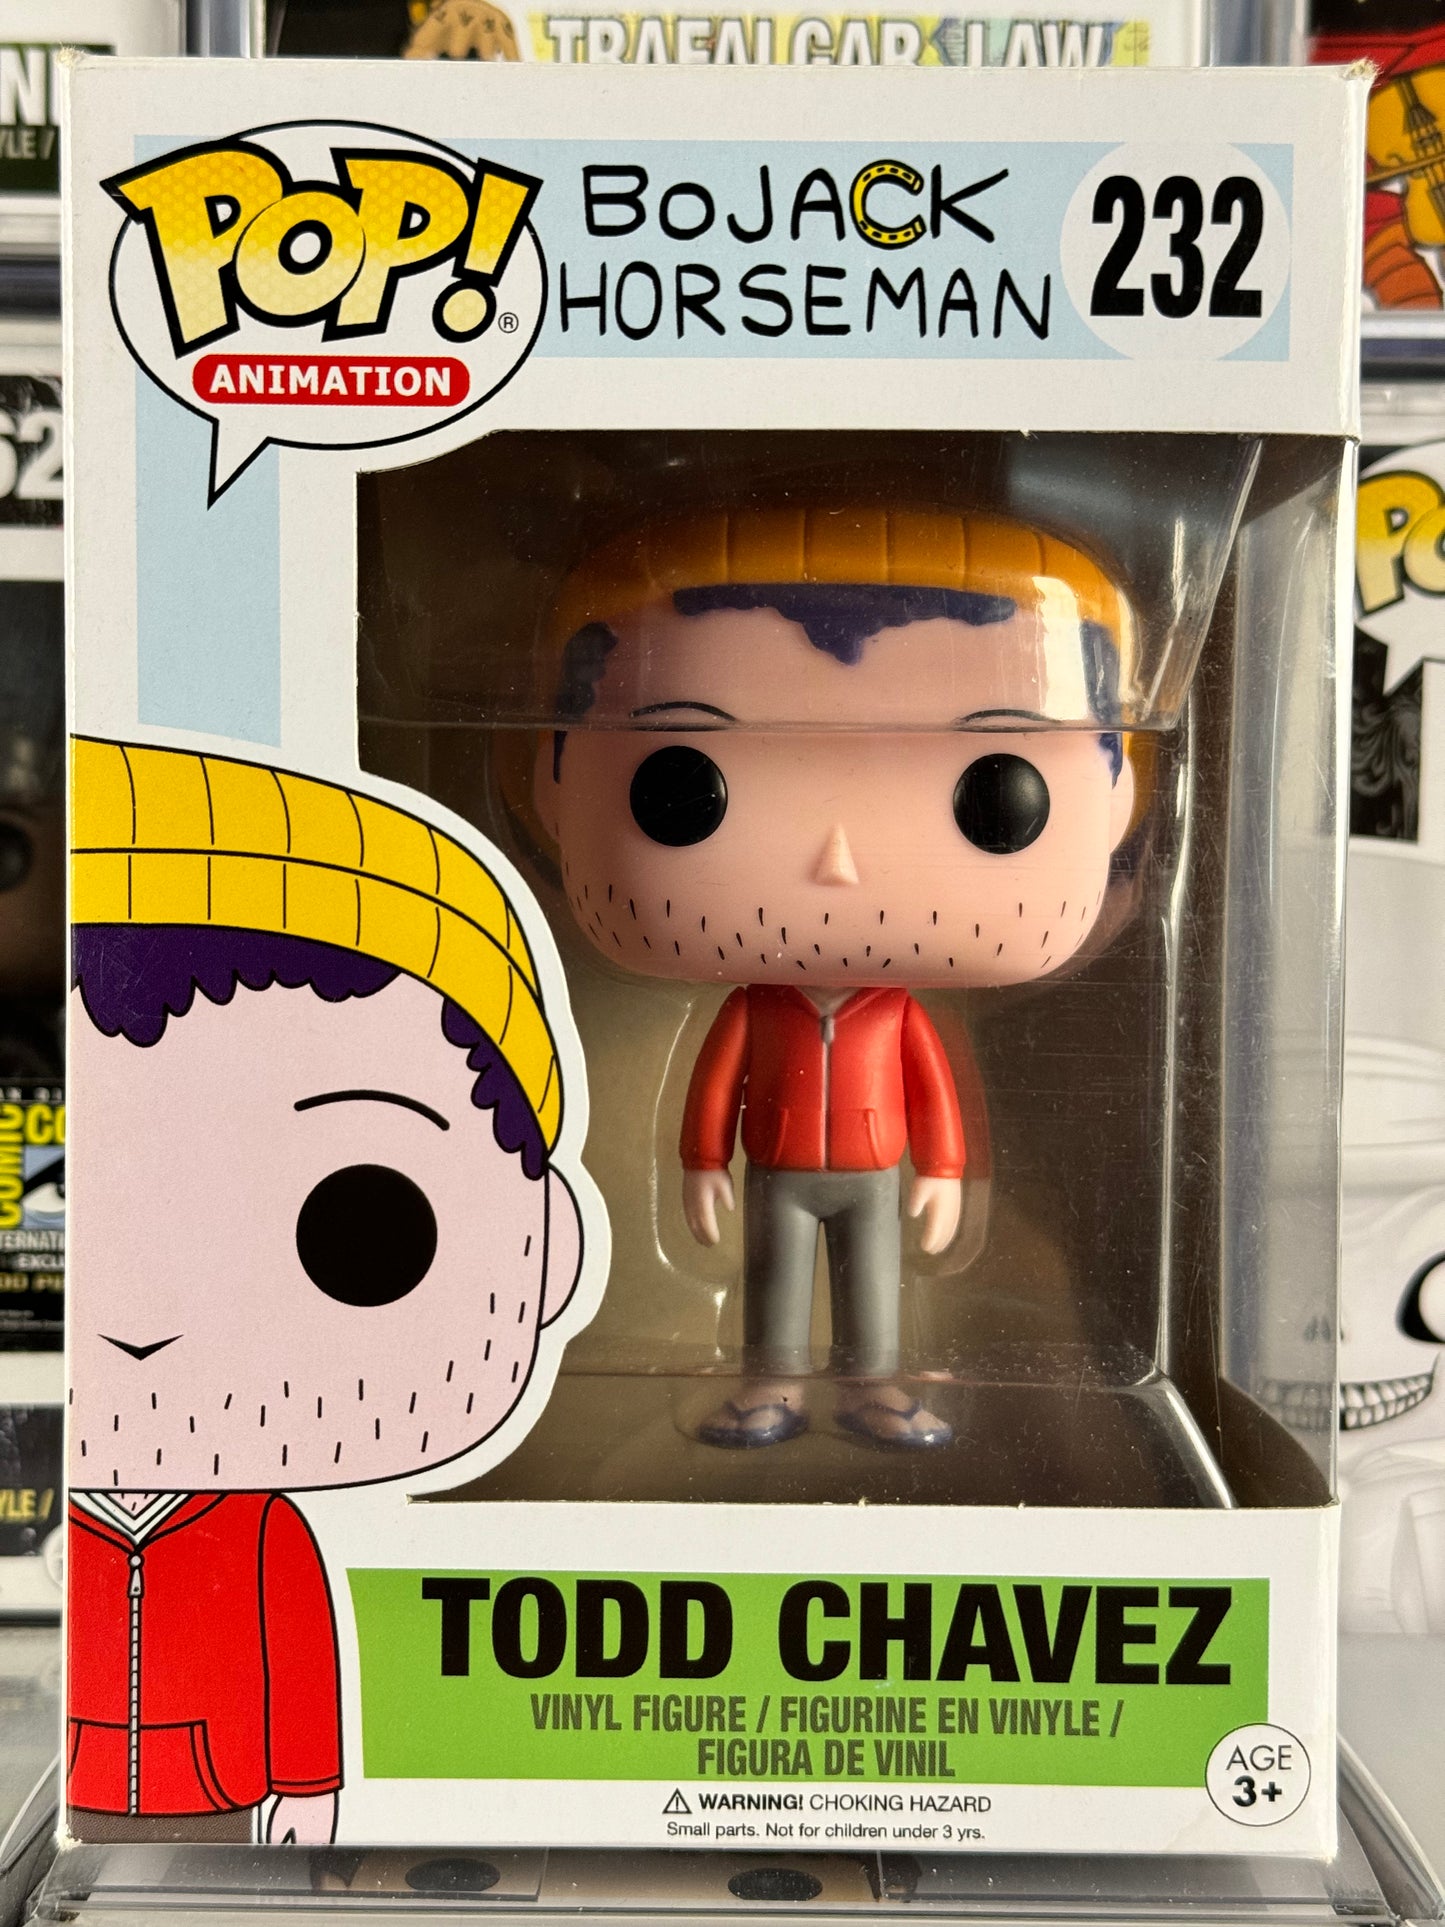 Bojack Horseman - Todd Chavez (232) Vaulted